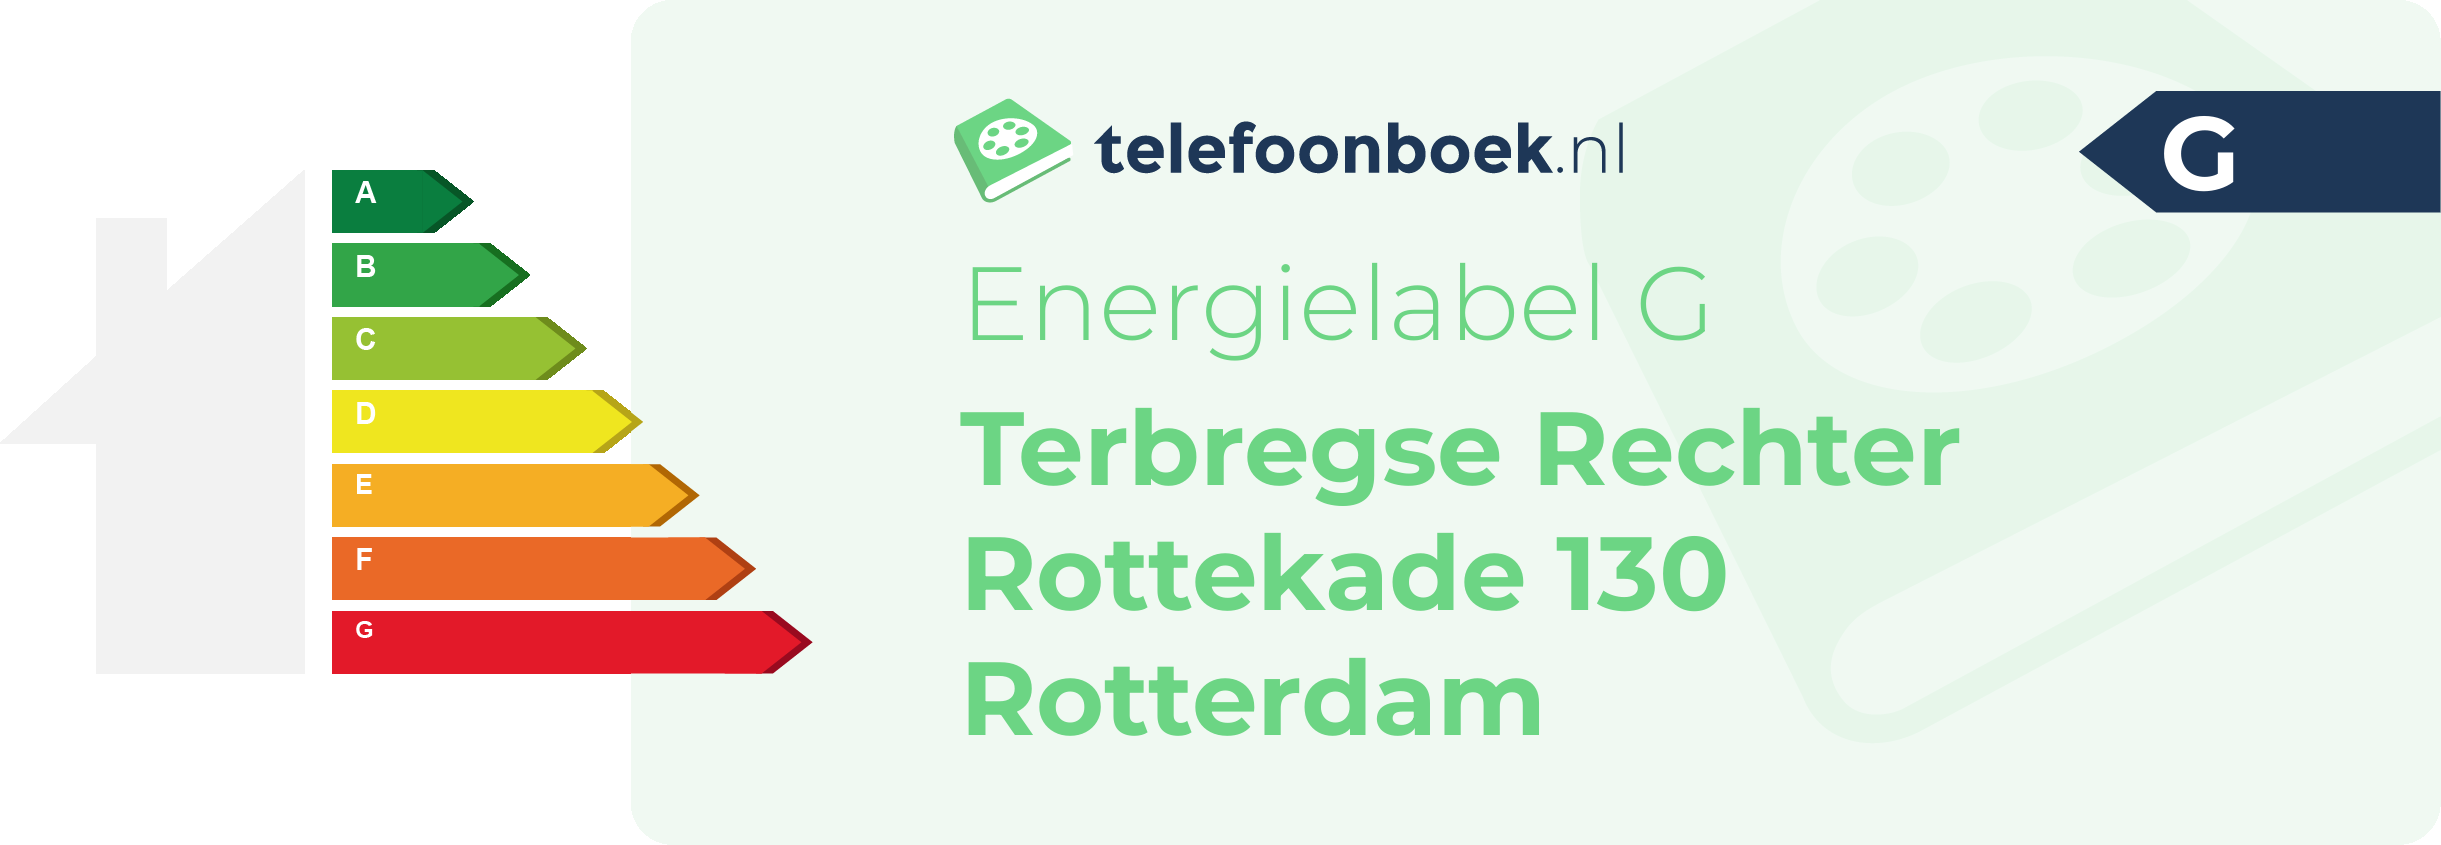 Energielabel Terbregse Rechter Rottekade 130 Rotterdam